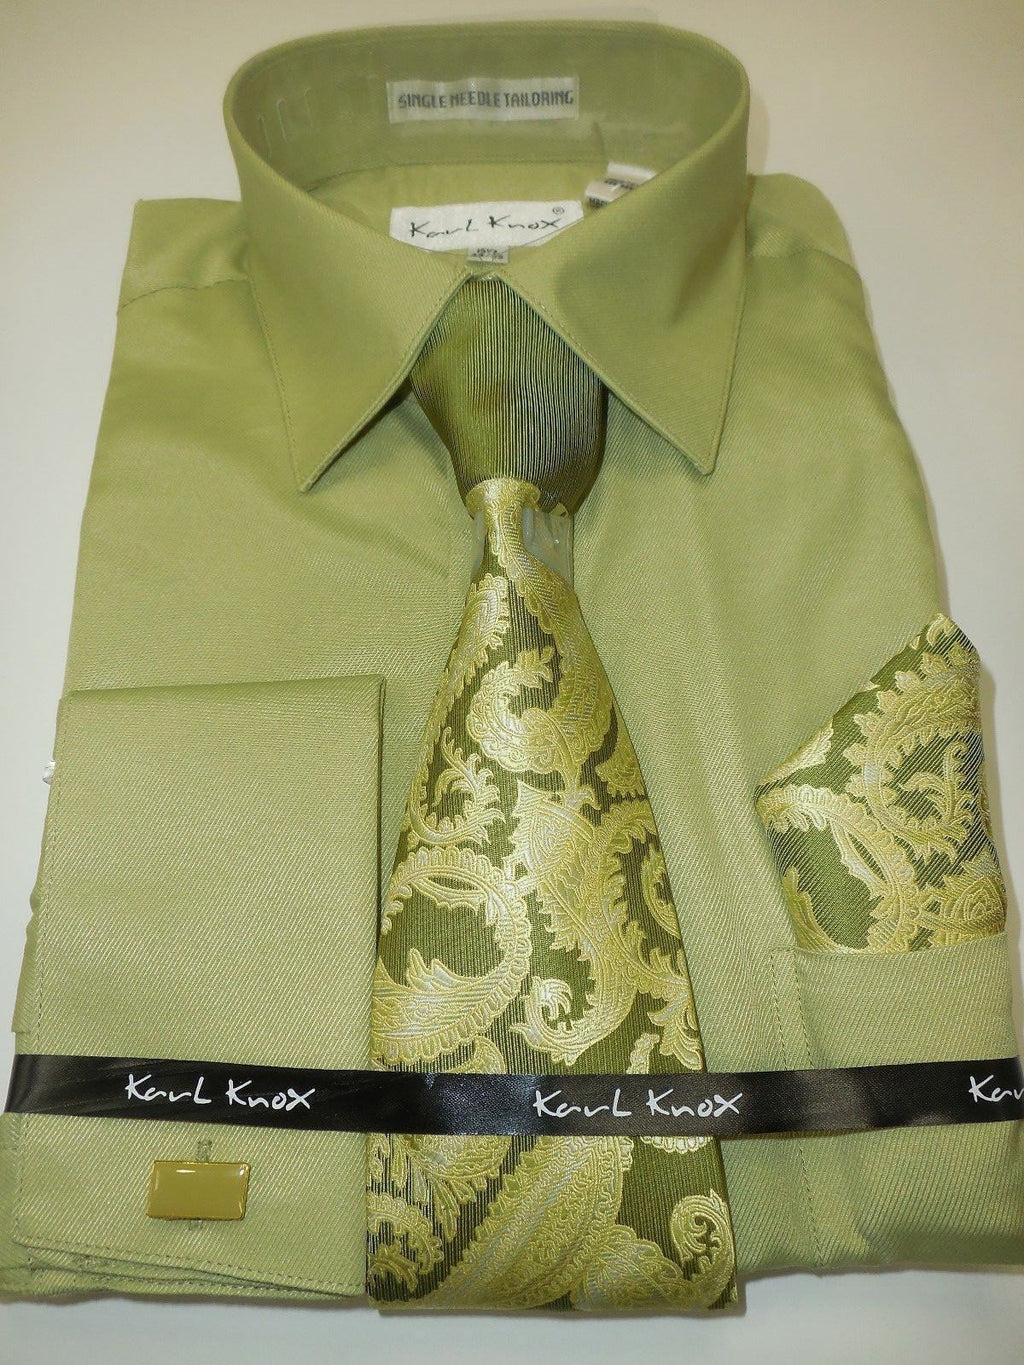 sage green mens dress shirt